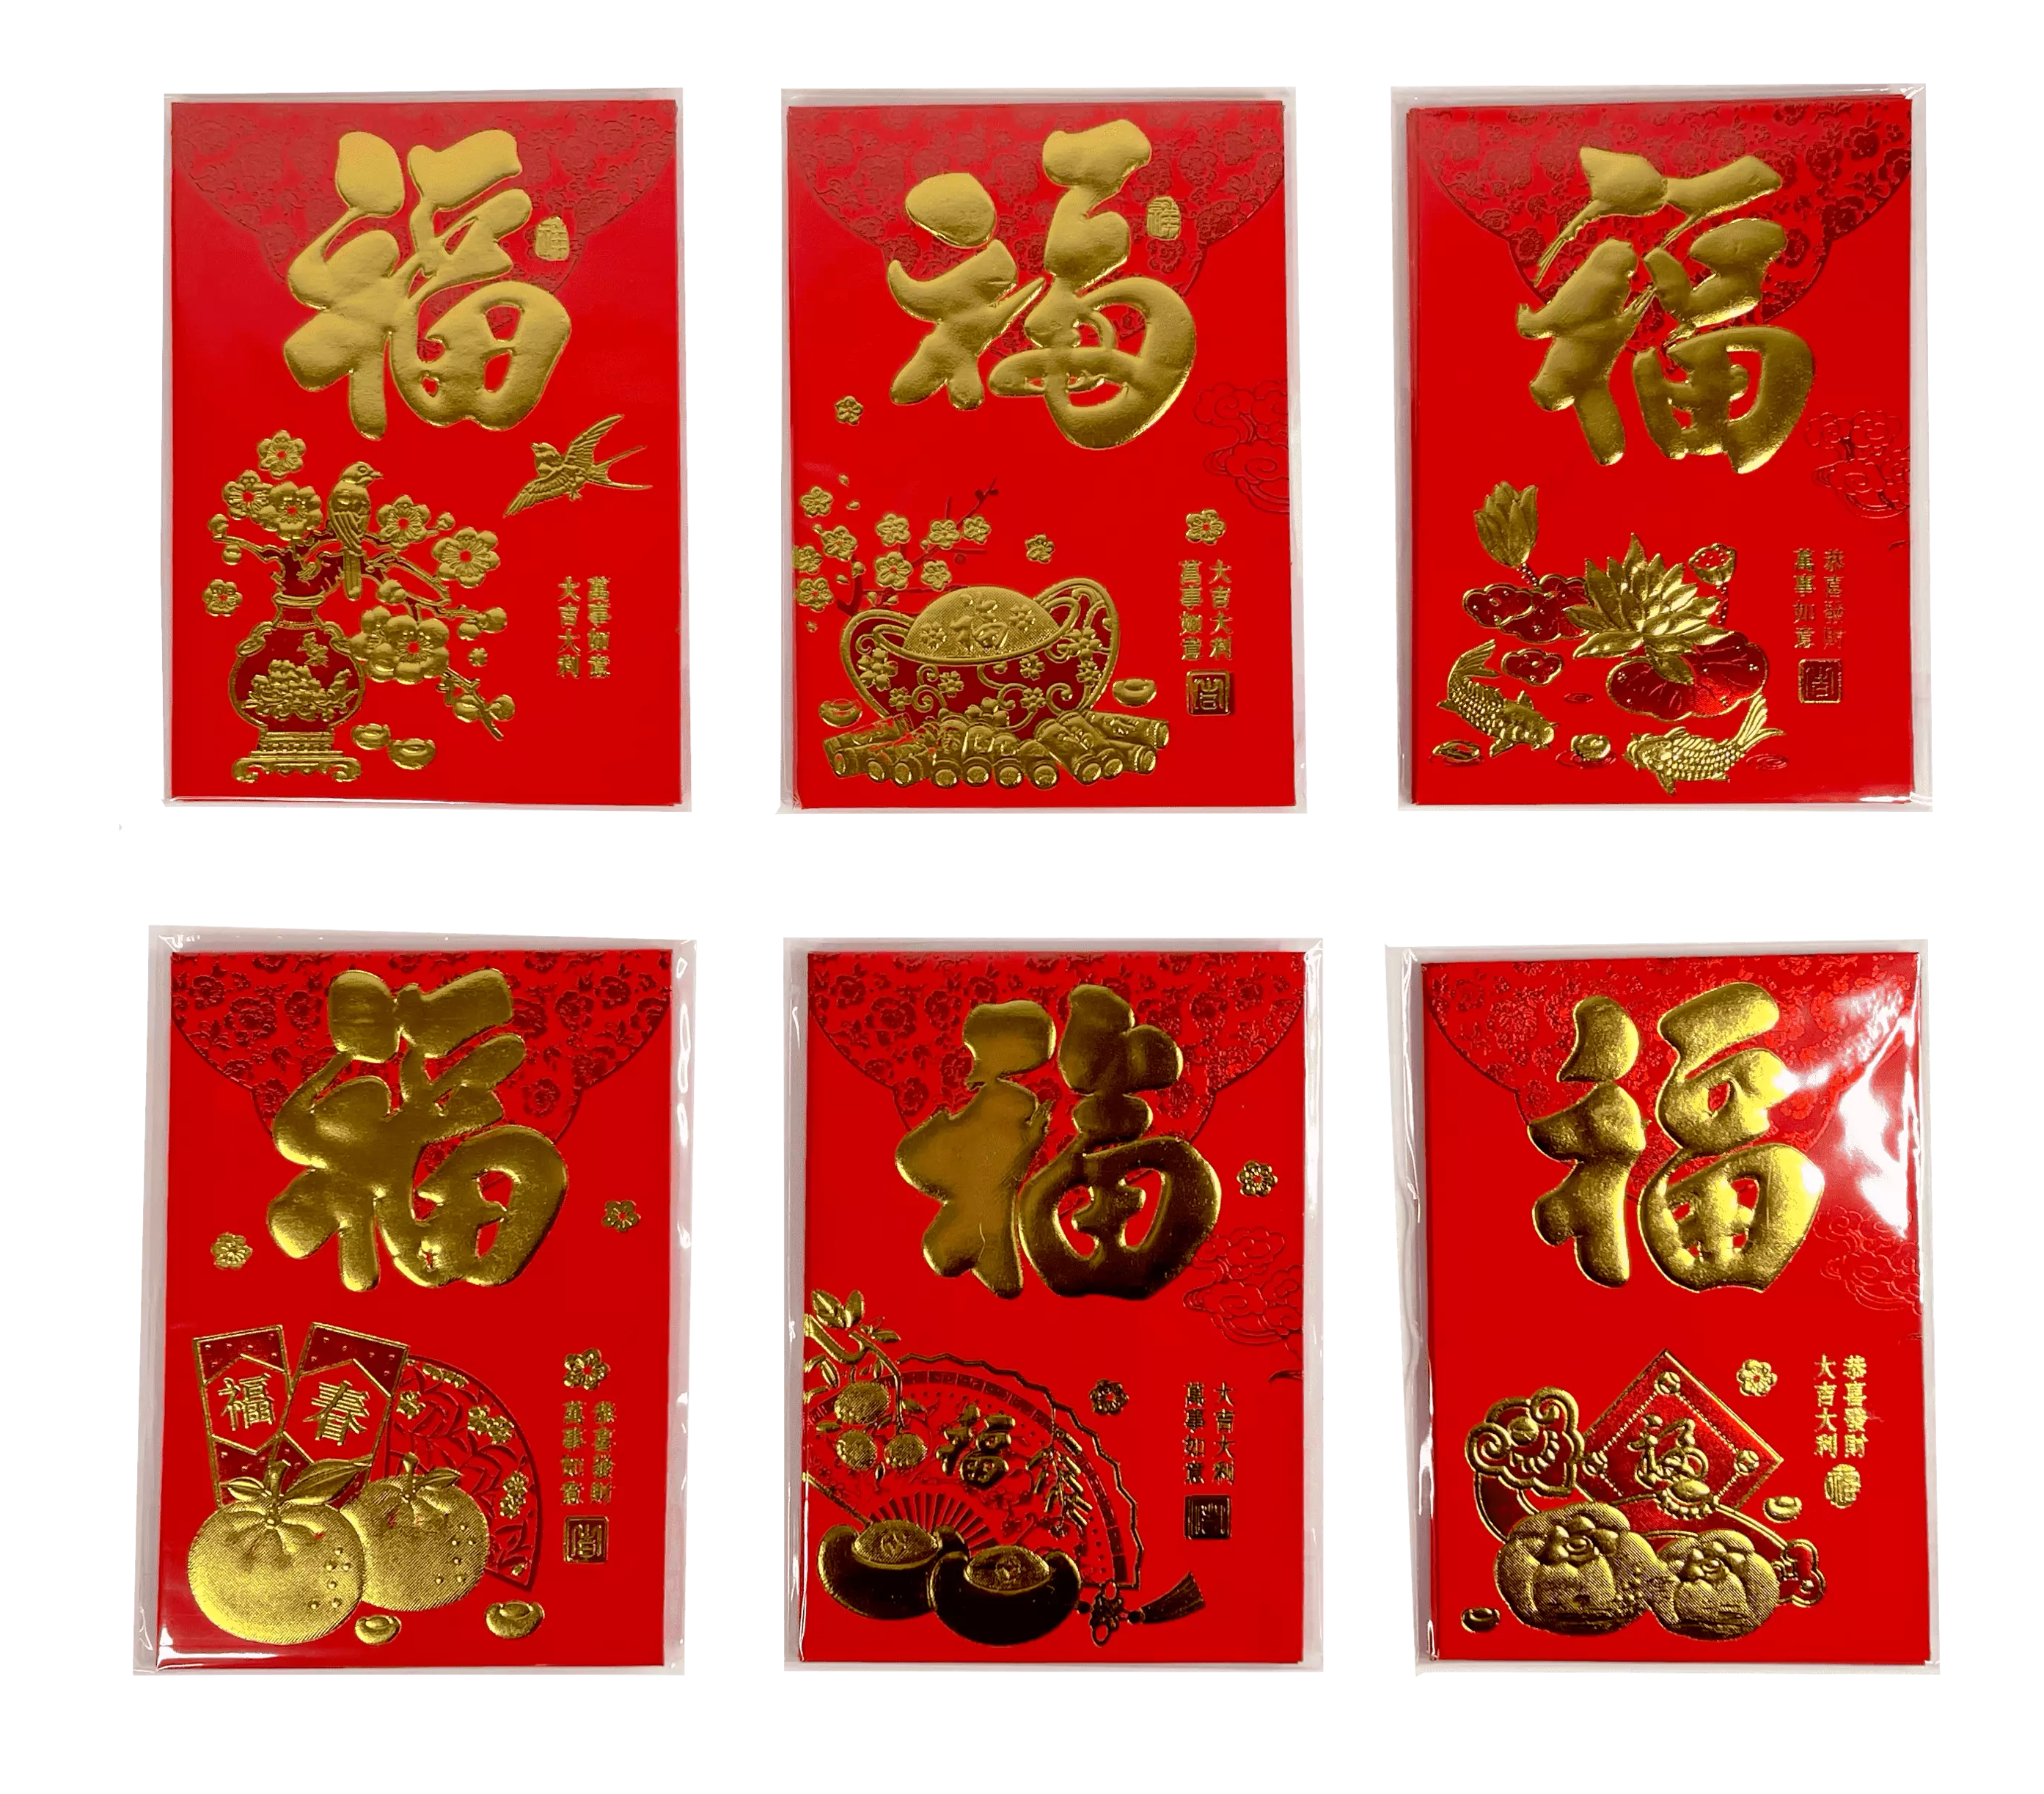 Red Envelope per bag (6 pcs), can not select motif - China